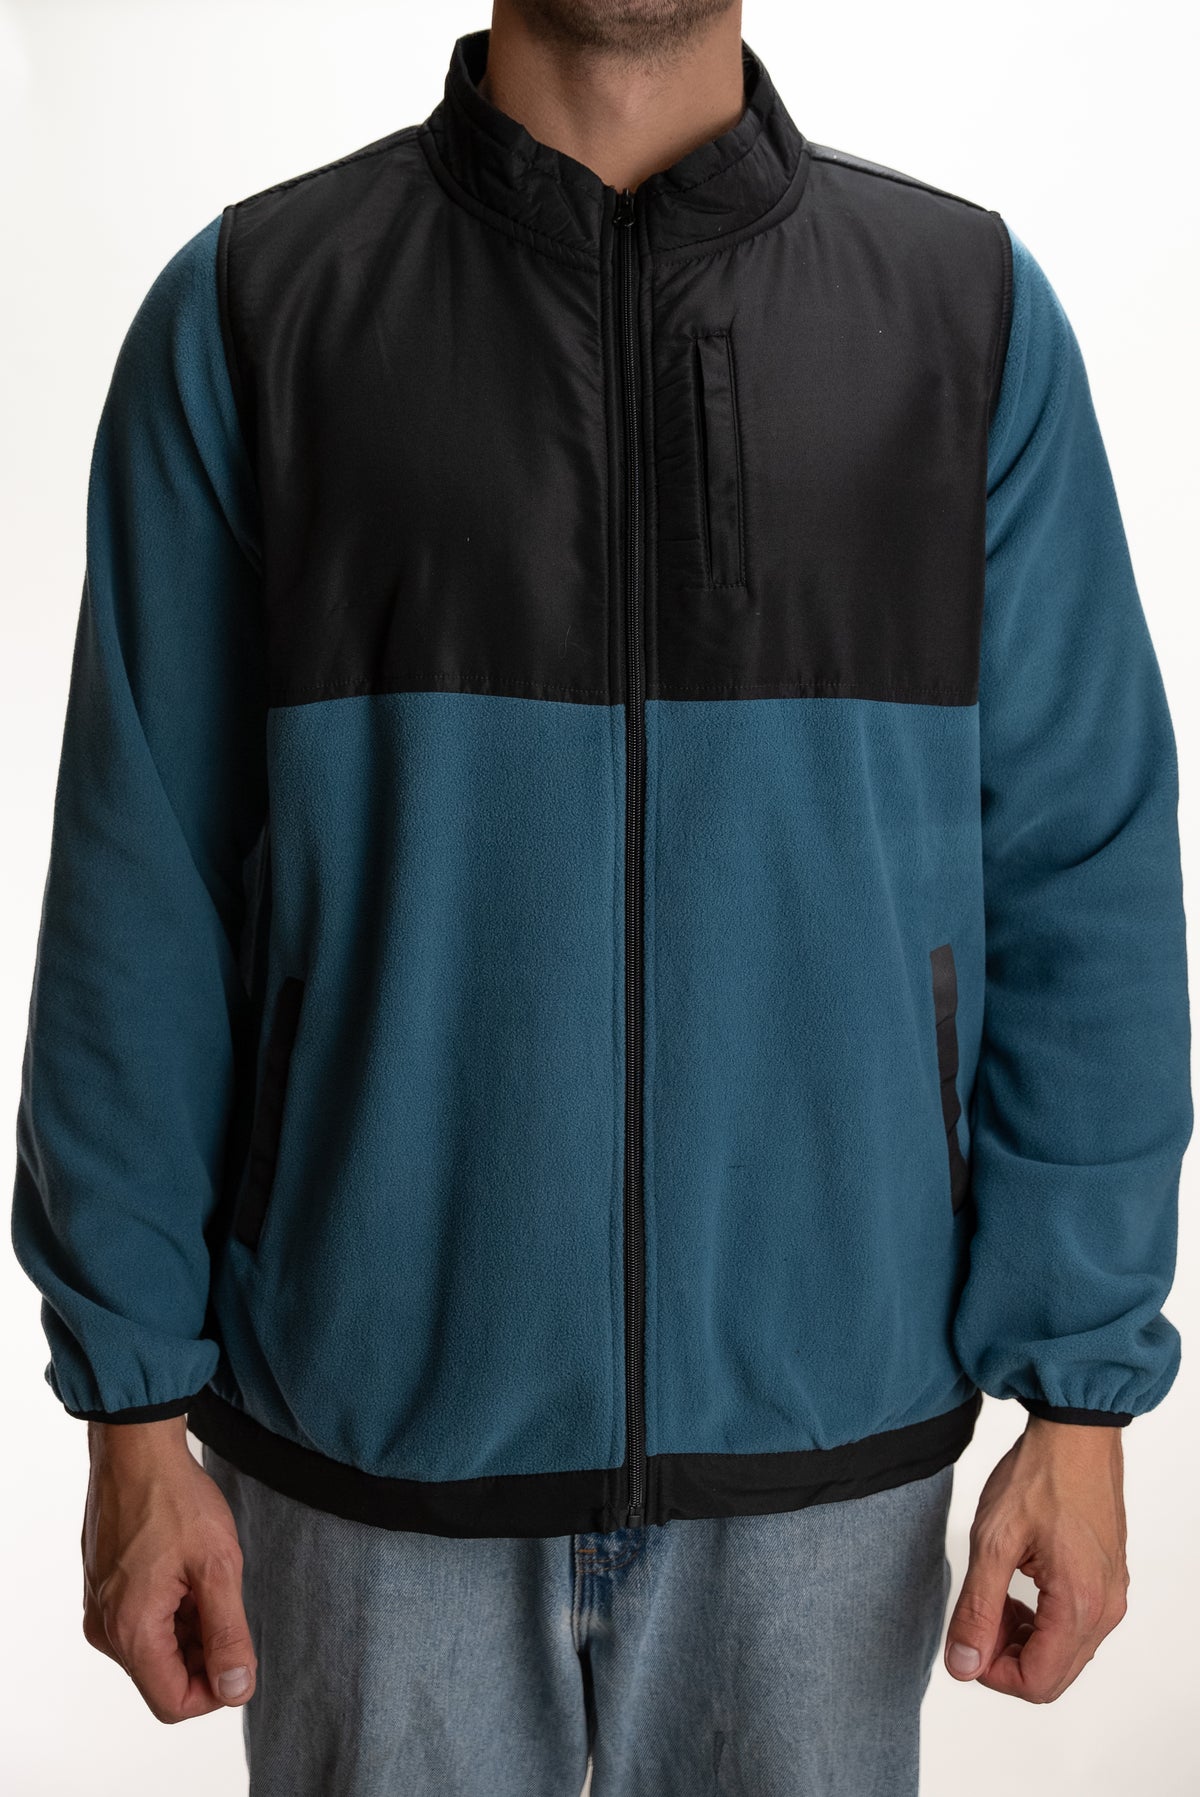 Bradley - Polar Fleece Jacket - Slate Blue